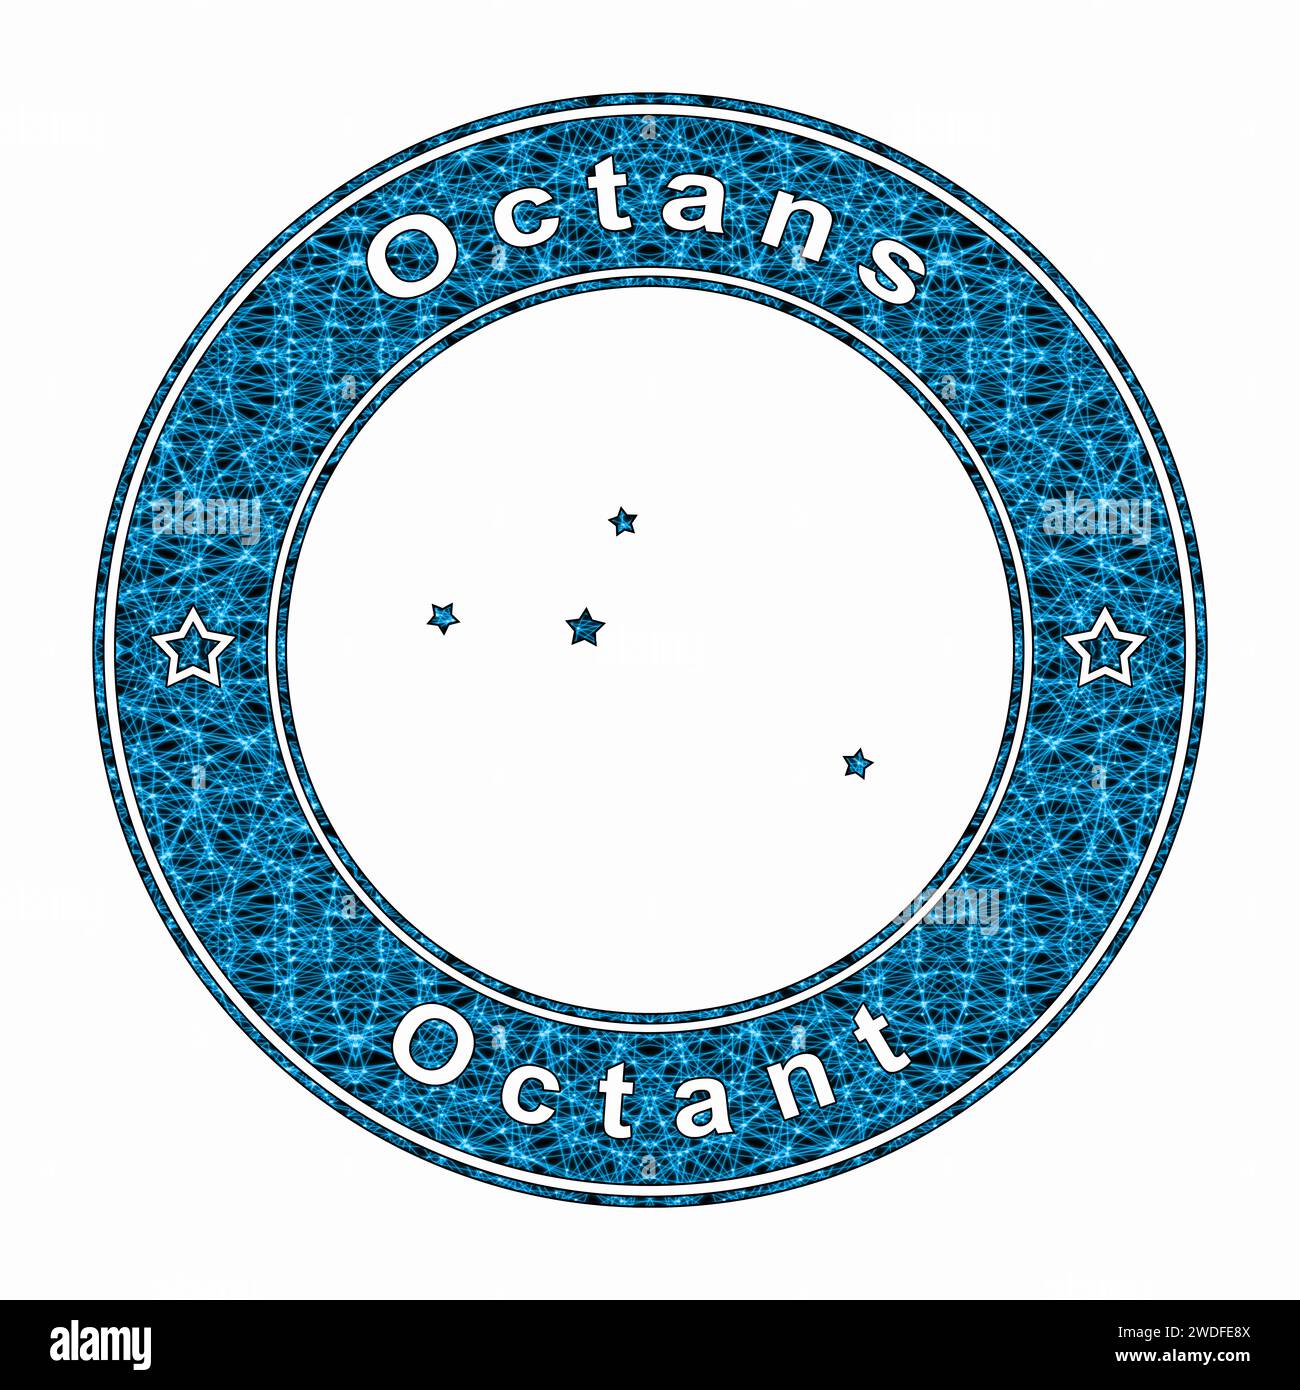 Octans Star Constellation, Cluster of Stars, Octans Hadleianus, Octant Constellation Stock Photo